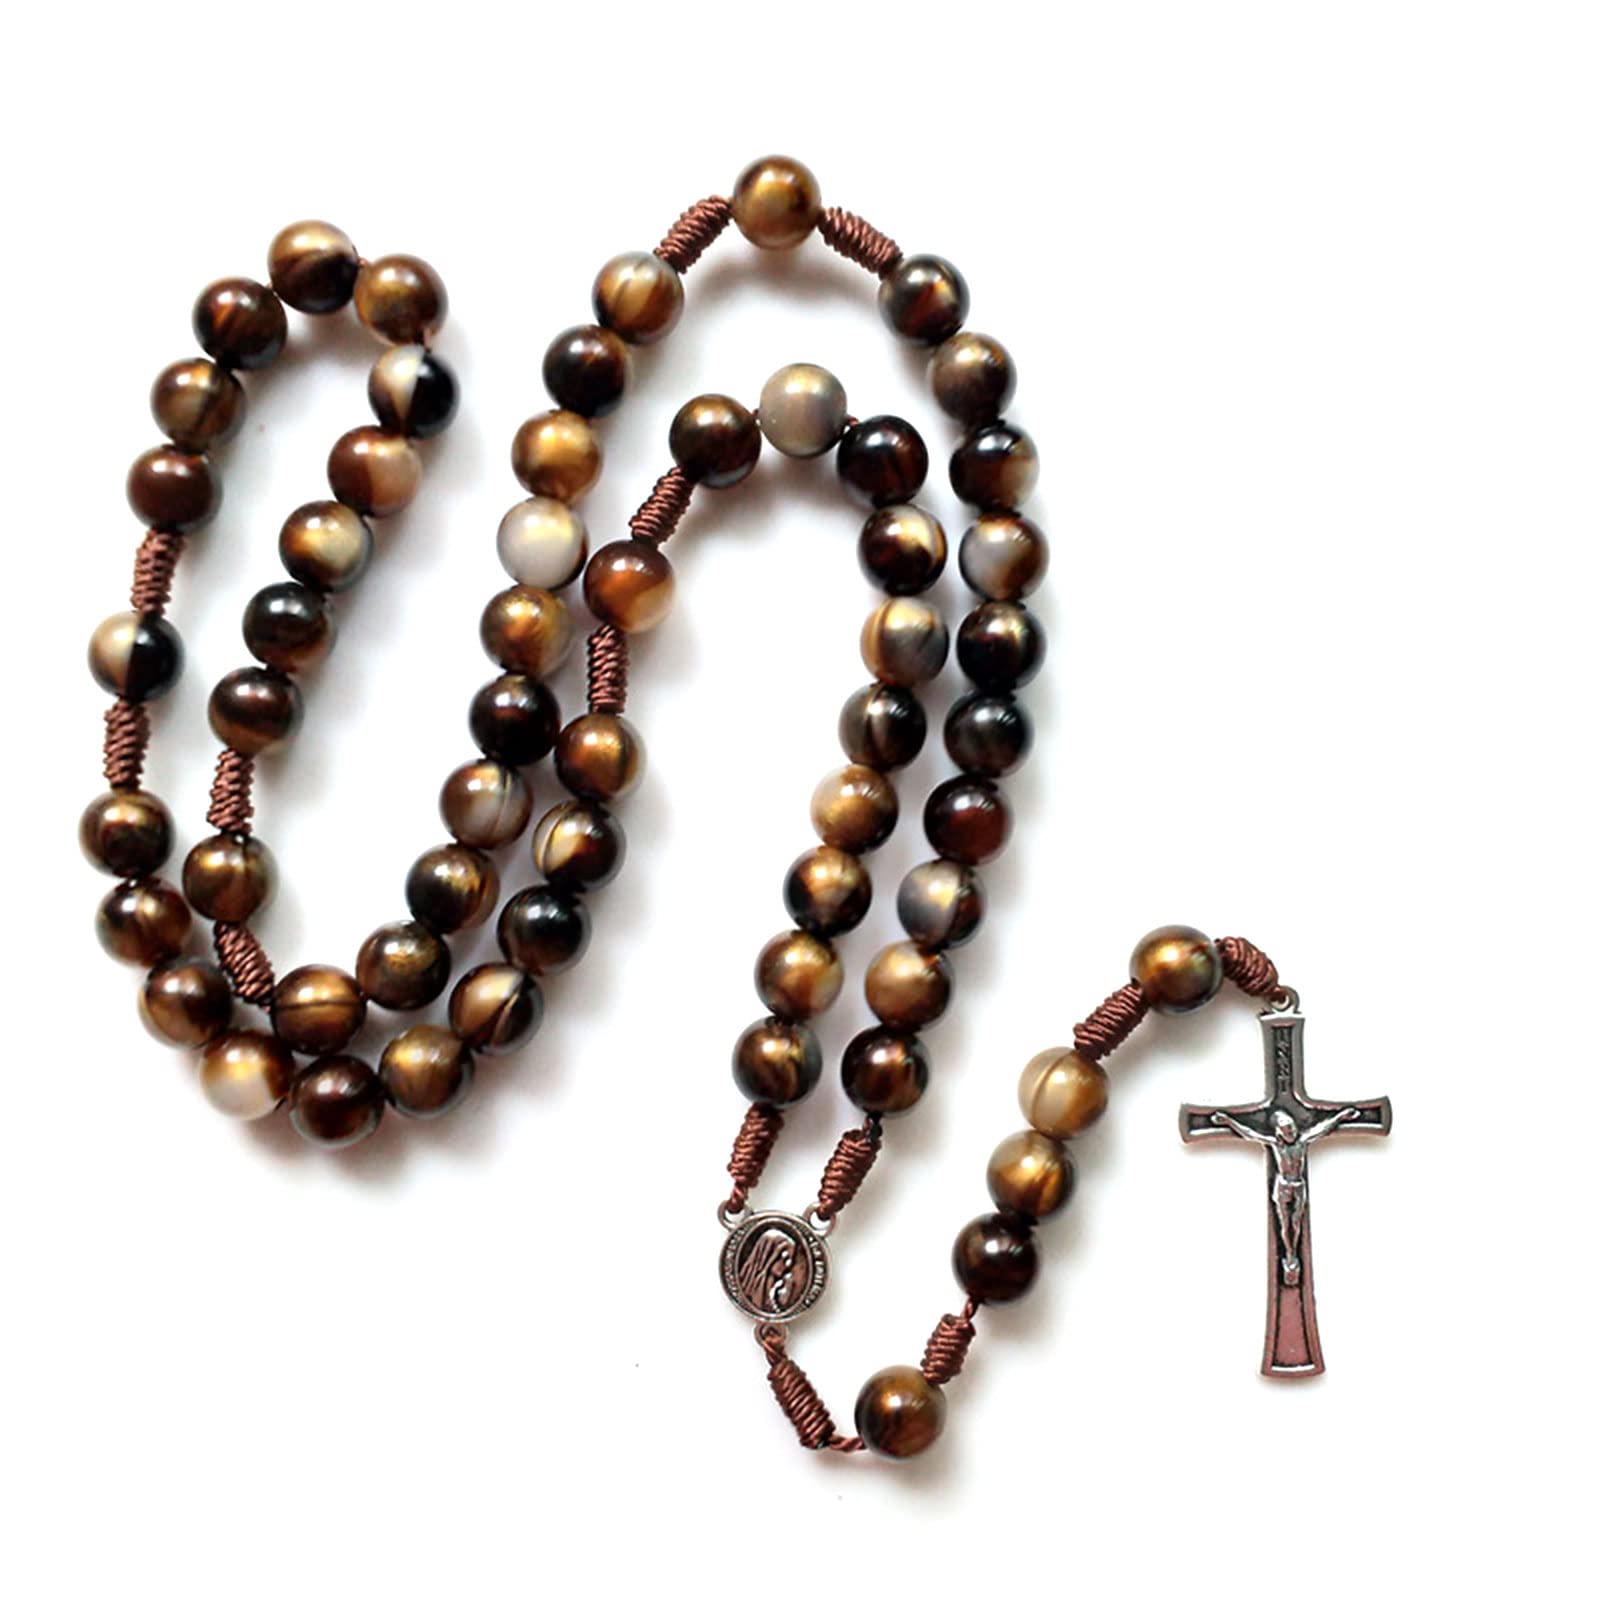 hejhncii Catholic Rosaries Necklace Crucifix Prayer Beads Pendant Necklace Prayer Religious For Cross Long Chain Handmade Jewelry Cross Pendant Necklace